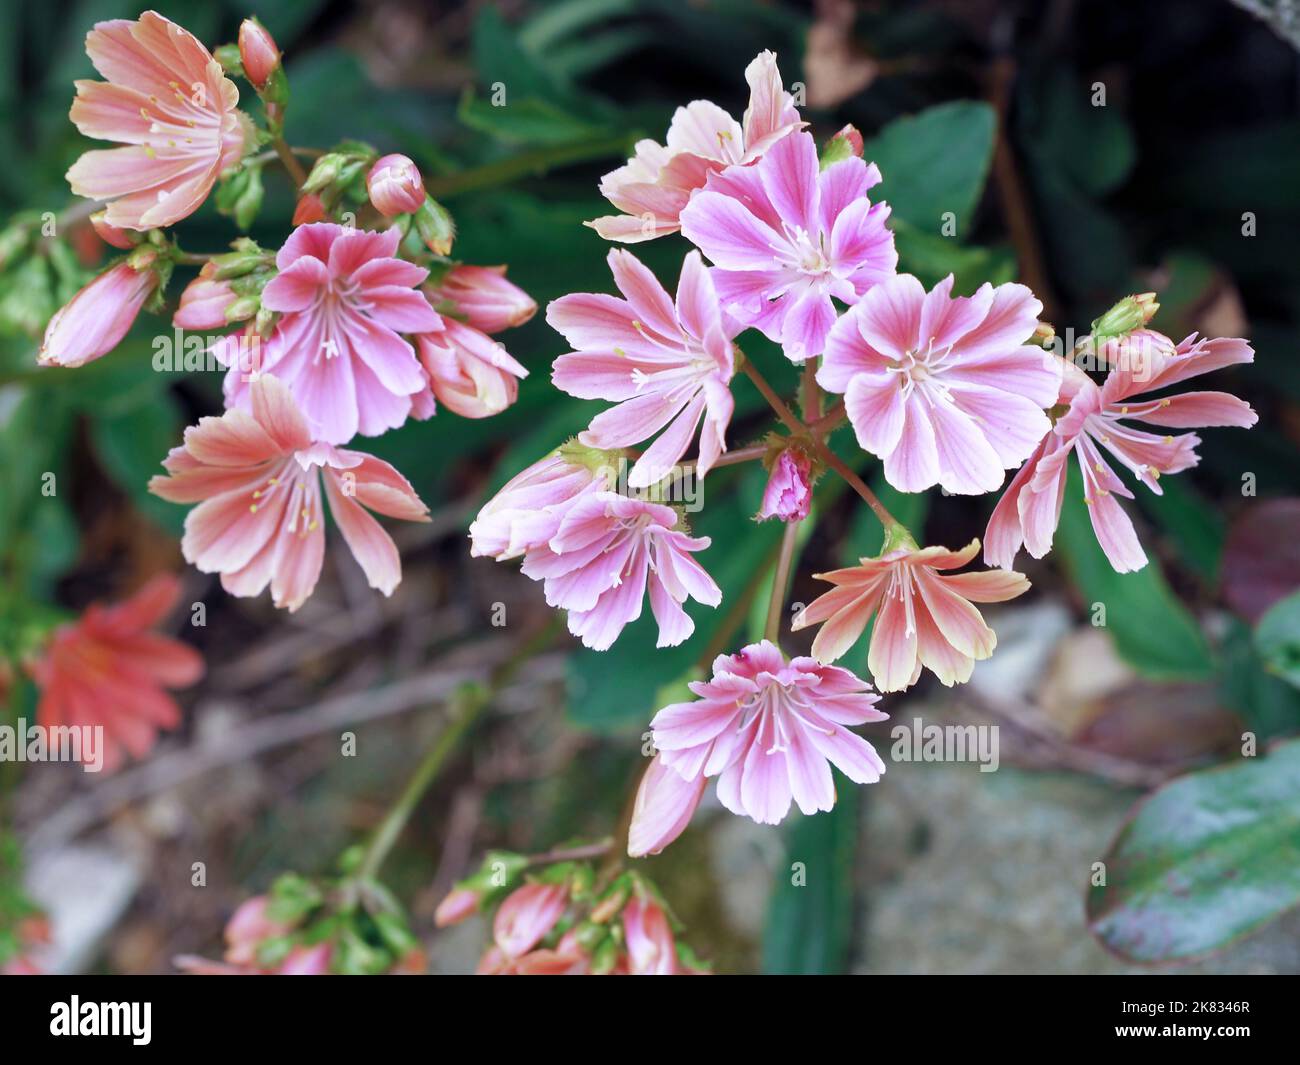 Siskiyou lewisia flowers in a rock garden Stock Photo